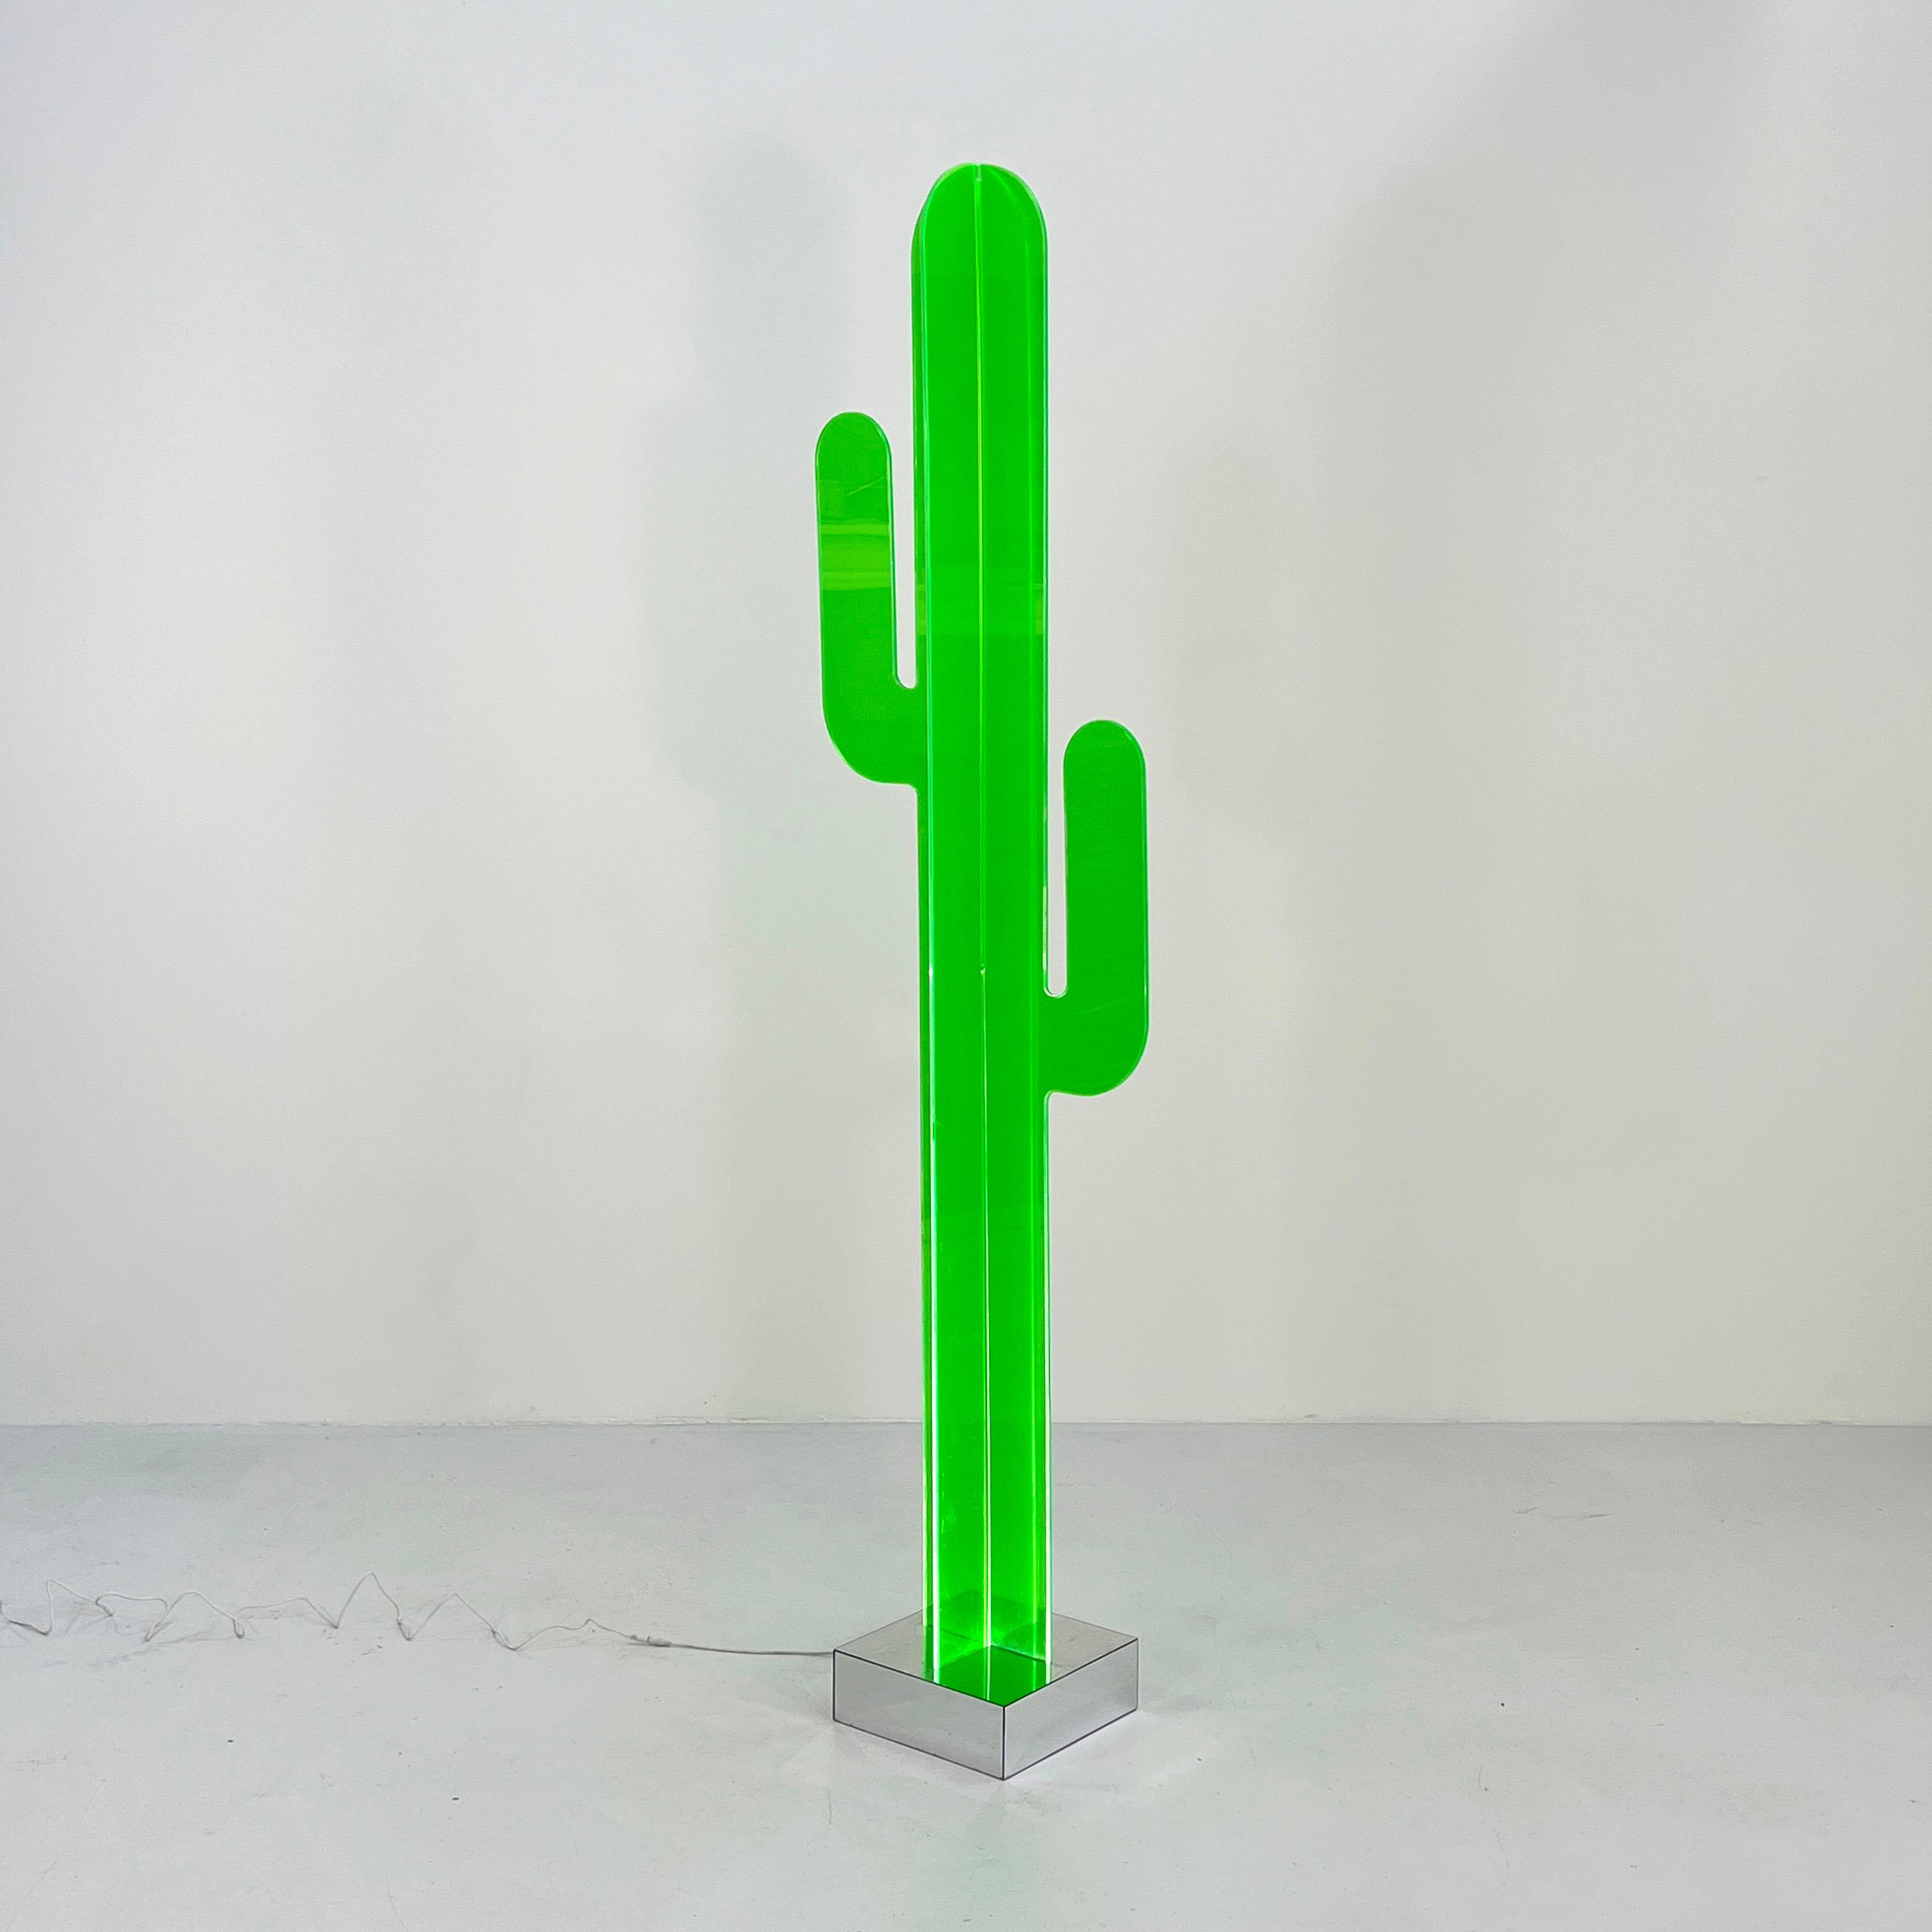 Acrylic Cactus Floor Lamp, 2000s.
Design Period - Noughties.
Measurements - Width 62 cm x depth 30 cm x height 210 cm. 
Materials - Acrylic, Plastic.
Color - Green, Silver.